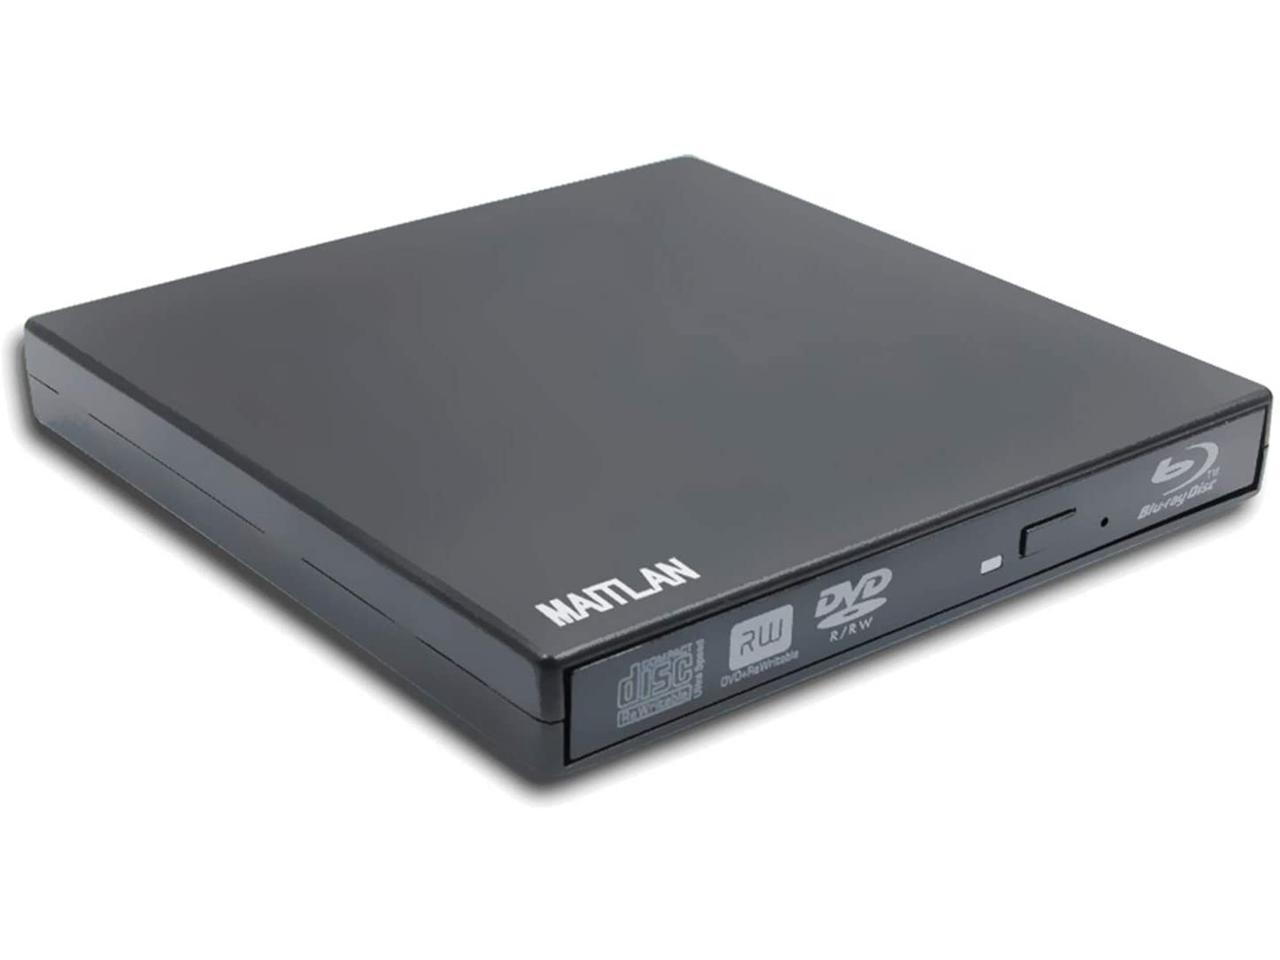 Double Layer 8X DVD+-RW DL DVD-RAM CD-RW Burner USB External Blu-ray Movies Disc Player BD-ROM Combo for Lenovo Joga Yoga 730 930 C930 920 C930 720 15 13 13ikb 15ikb 2-in-1 Laptop 